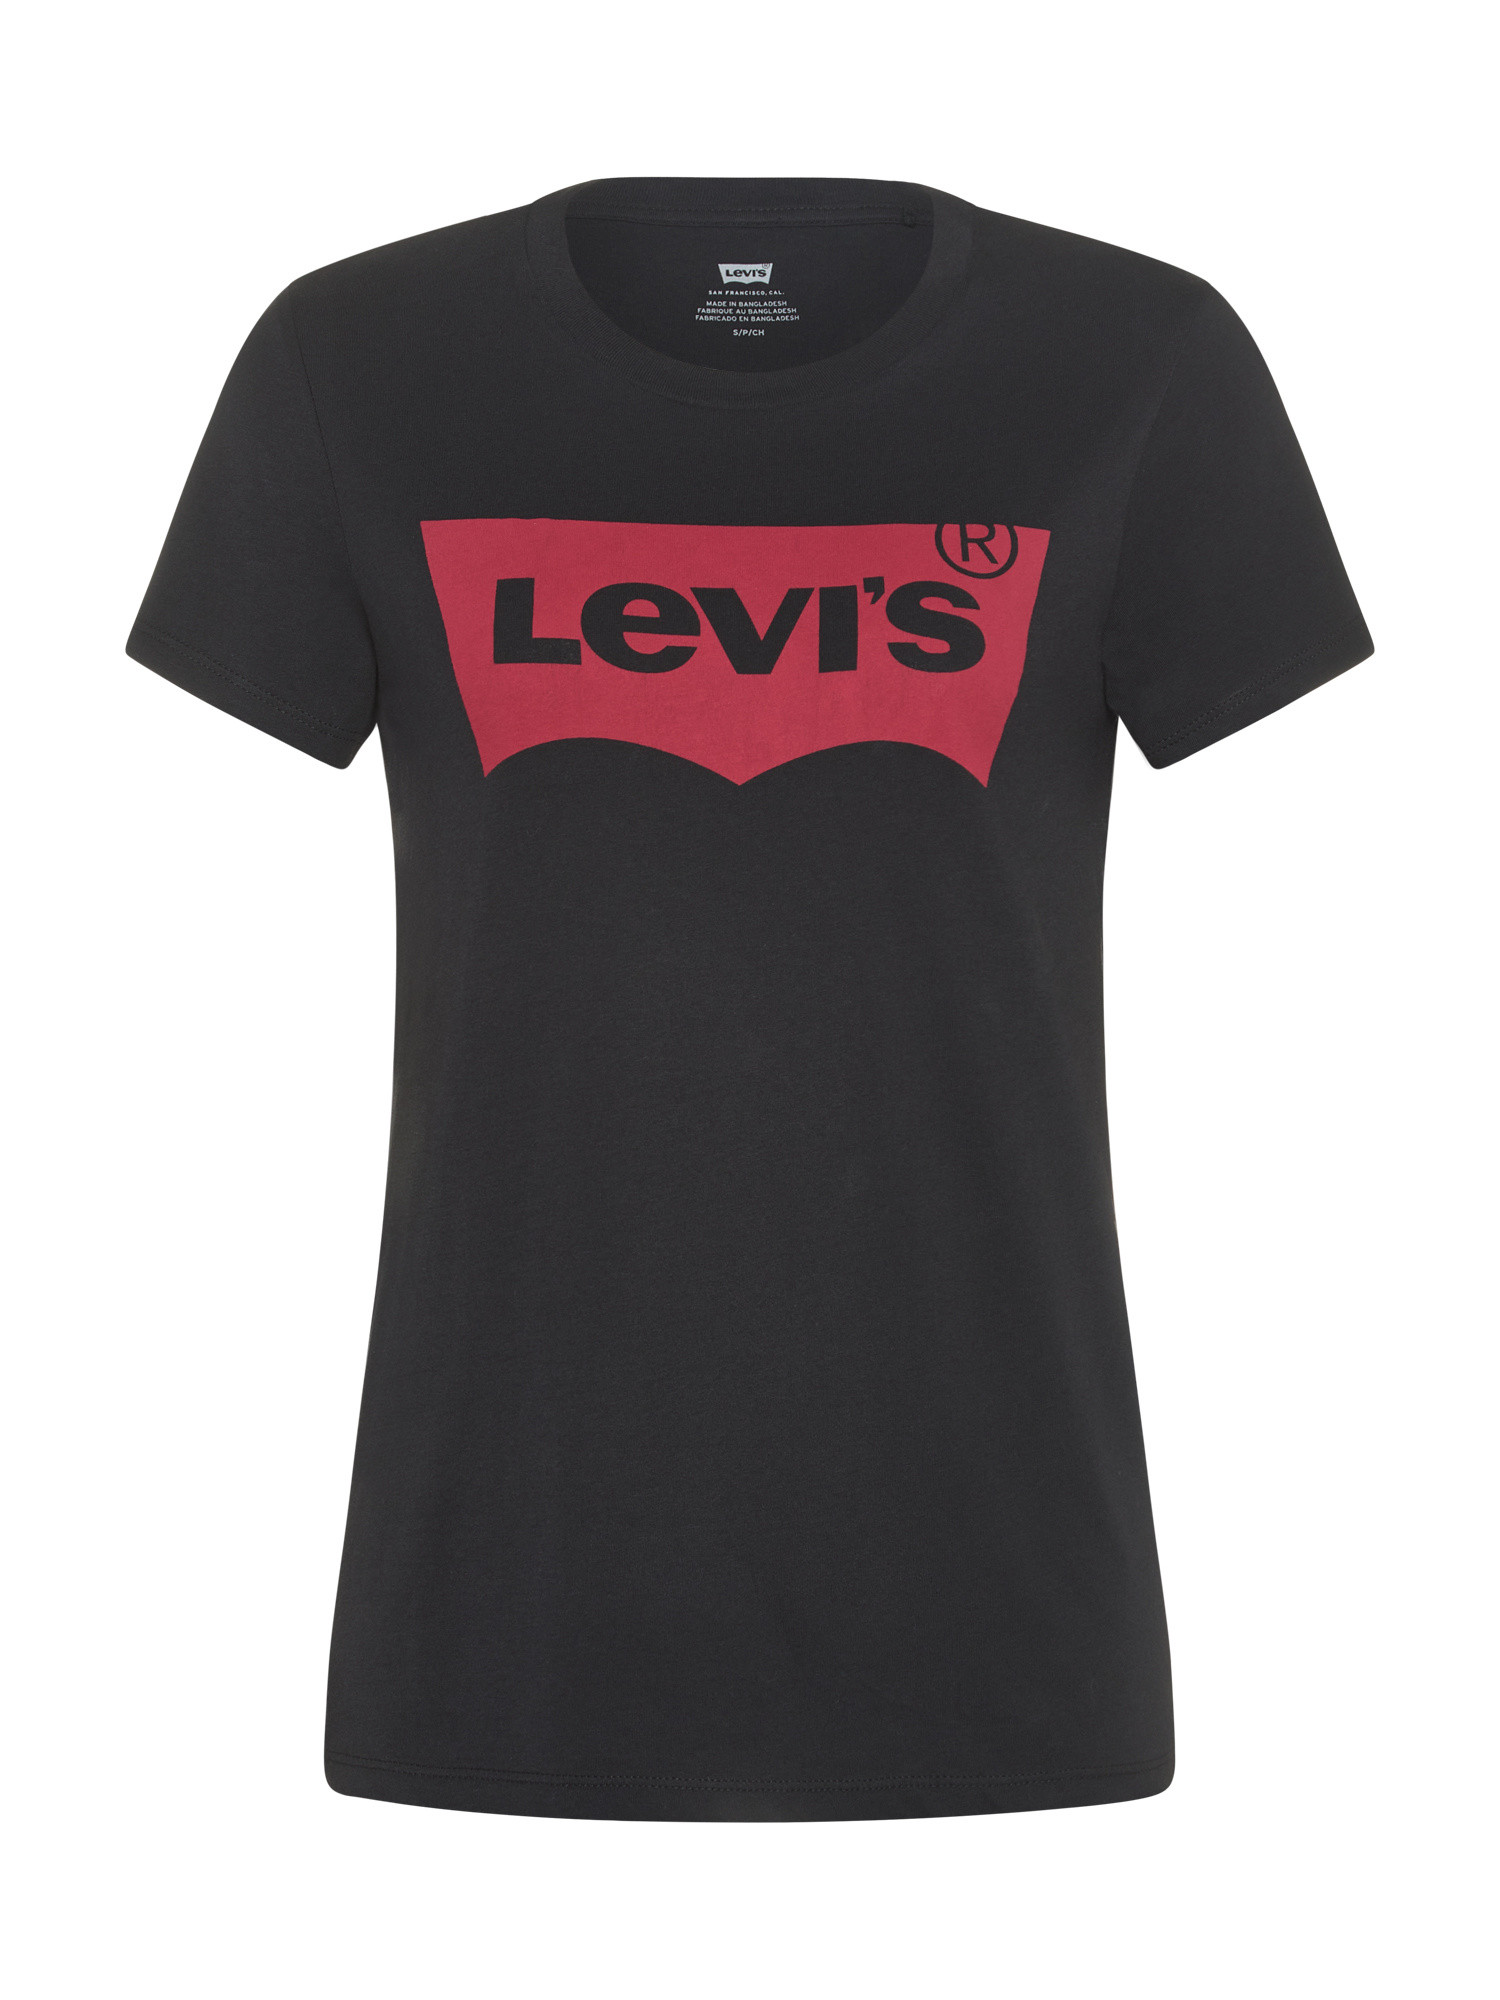 Levi's - Cotton T-shirt with logo print, Black, large image number 0